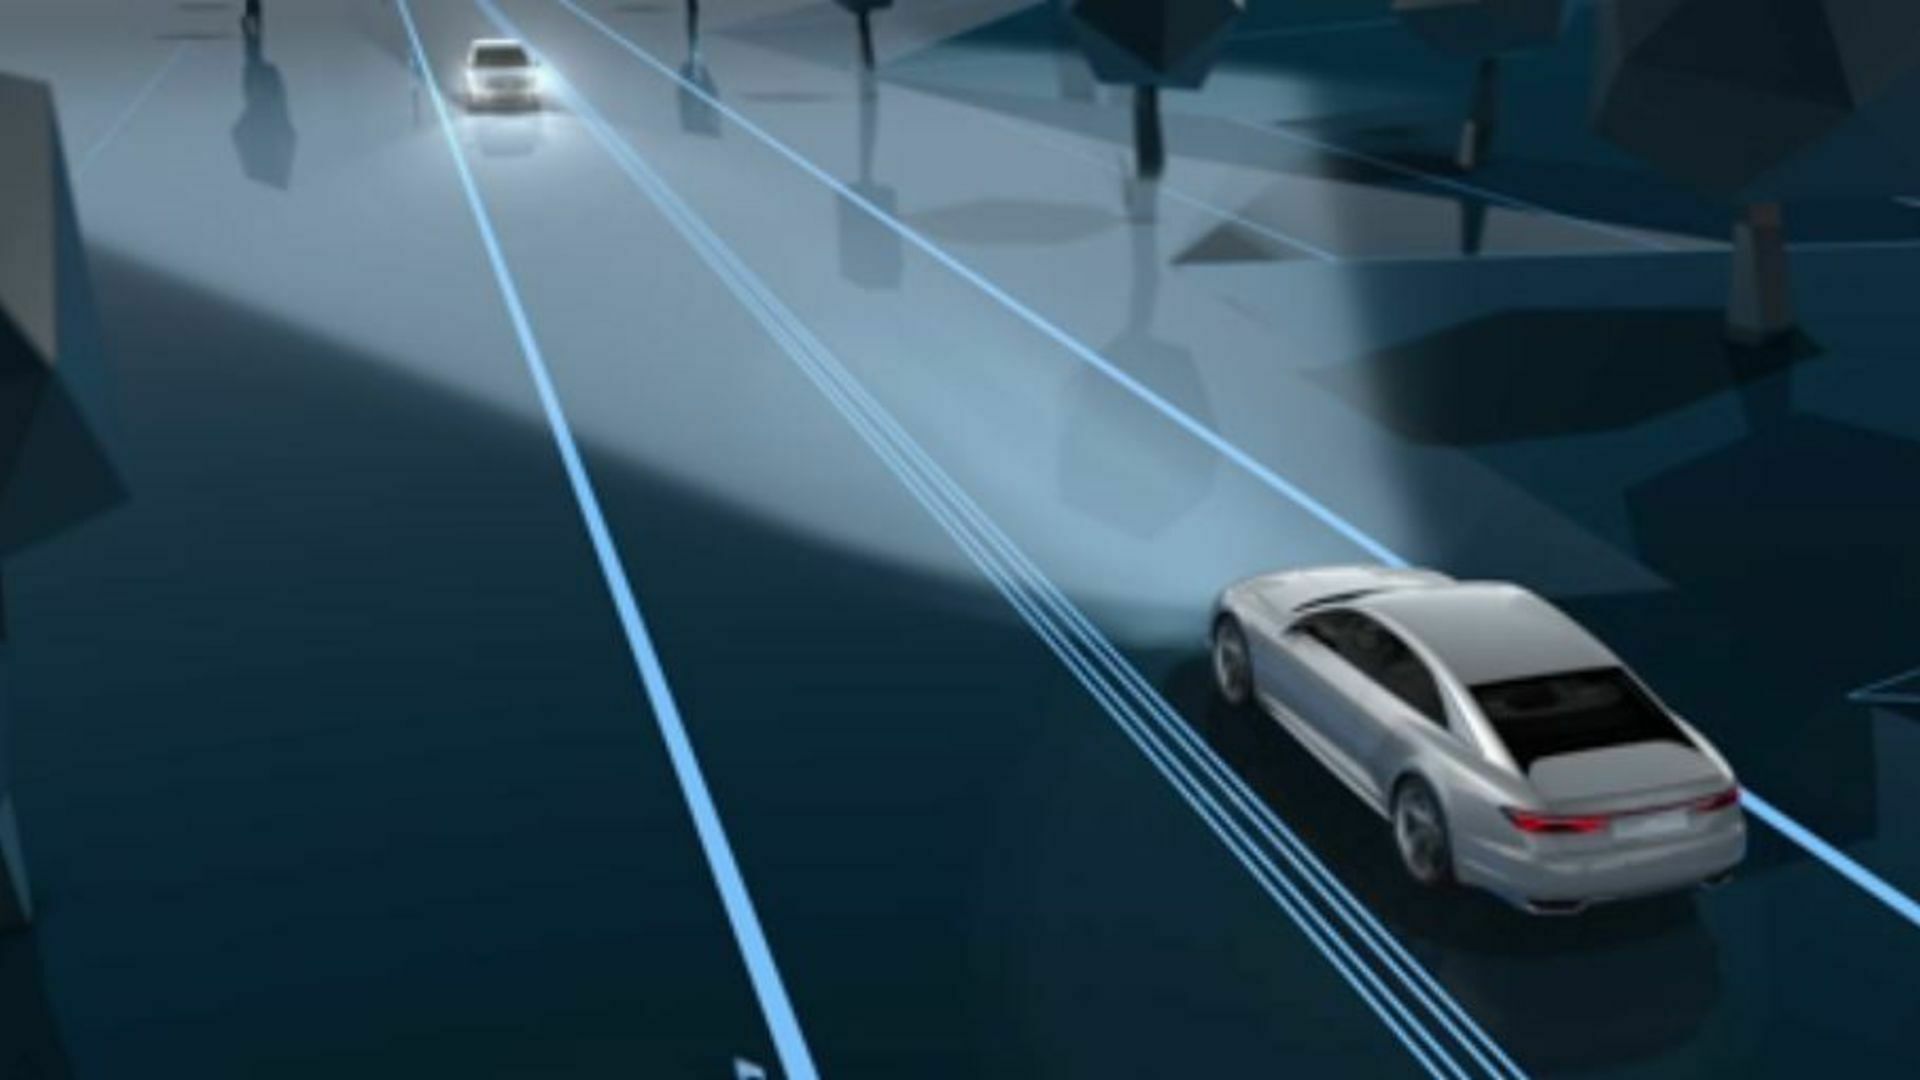 Audi future lab - lighting tech and design - Animation Matrix Laser